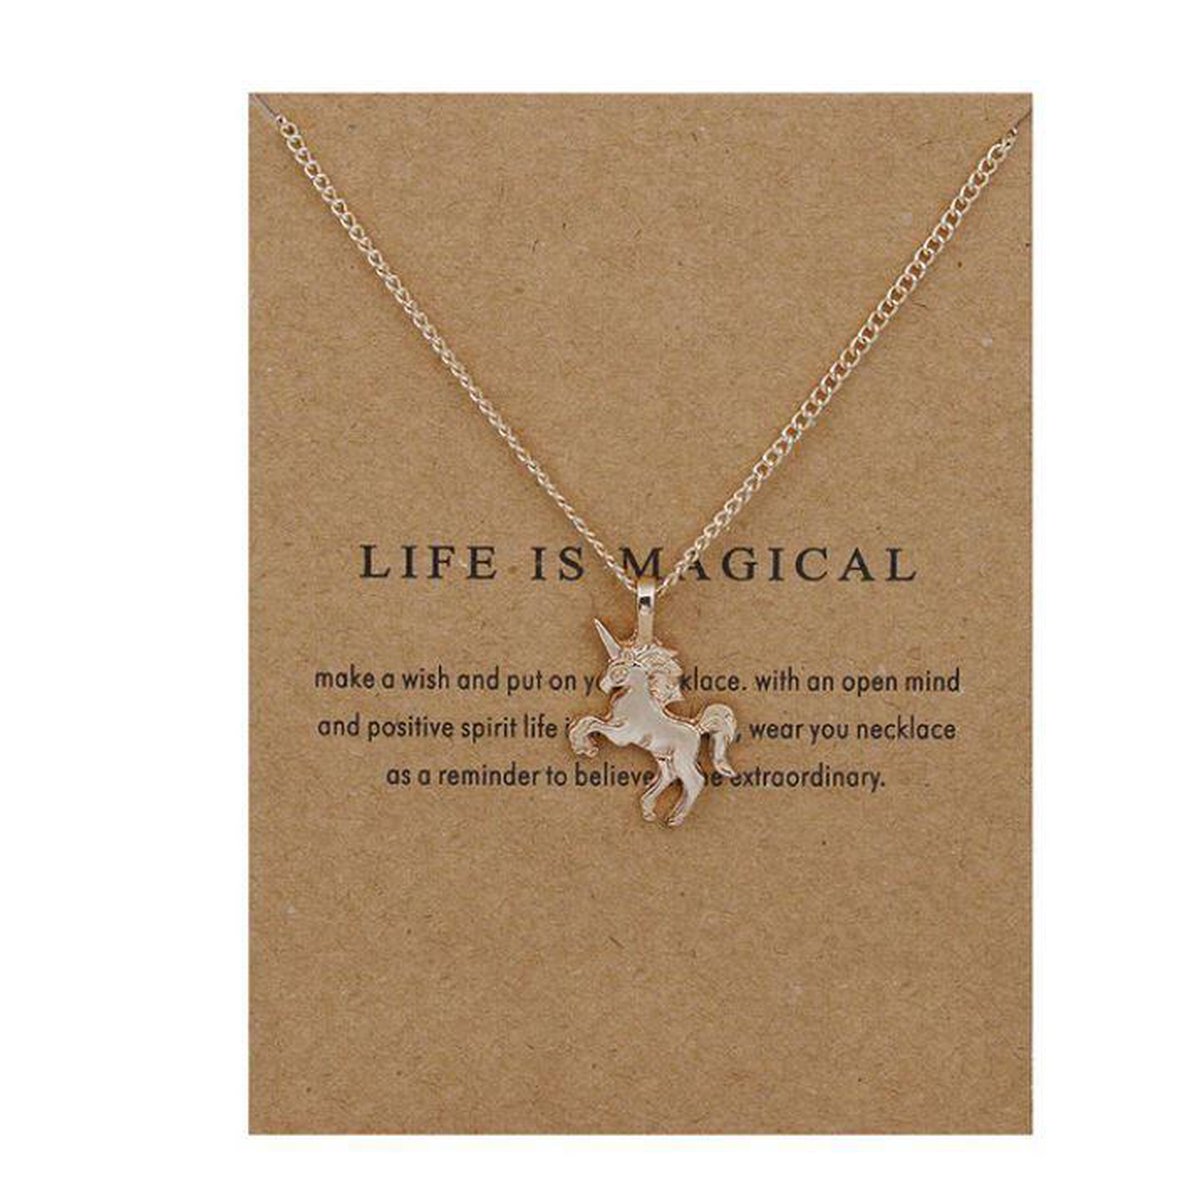 Akyol - Life is magic ketting - Unicorn ketting - Geluksketting - Eenhoorn ketting - Goudkleurige ketting - leuk cadeau om te geven of te krijgen